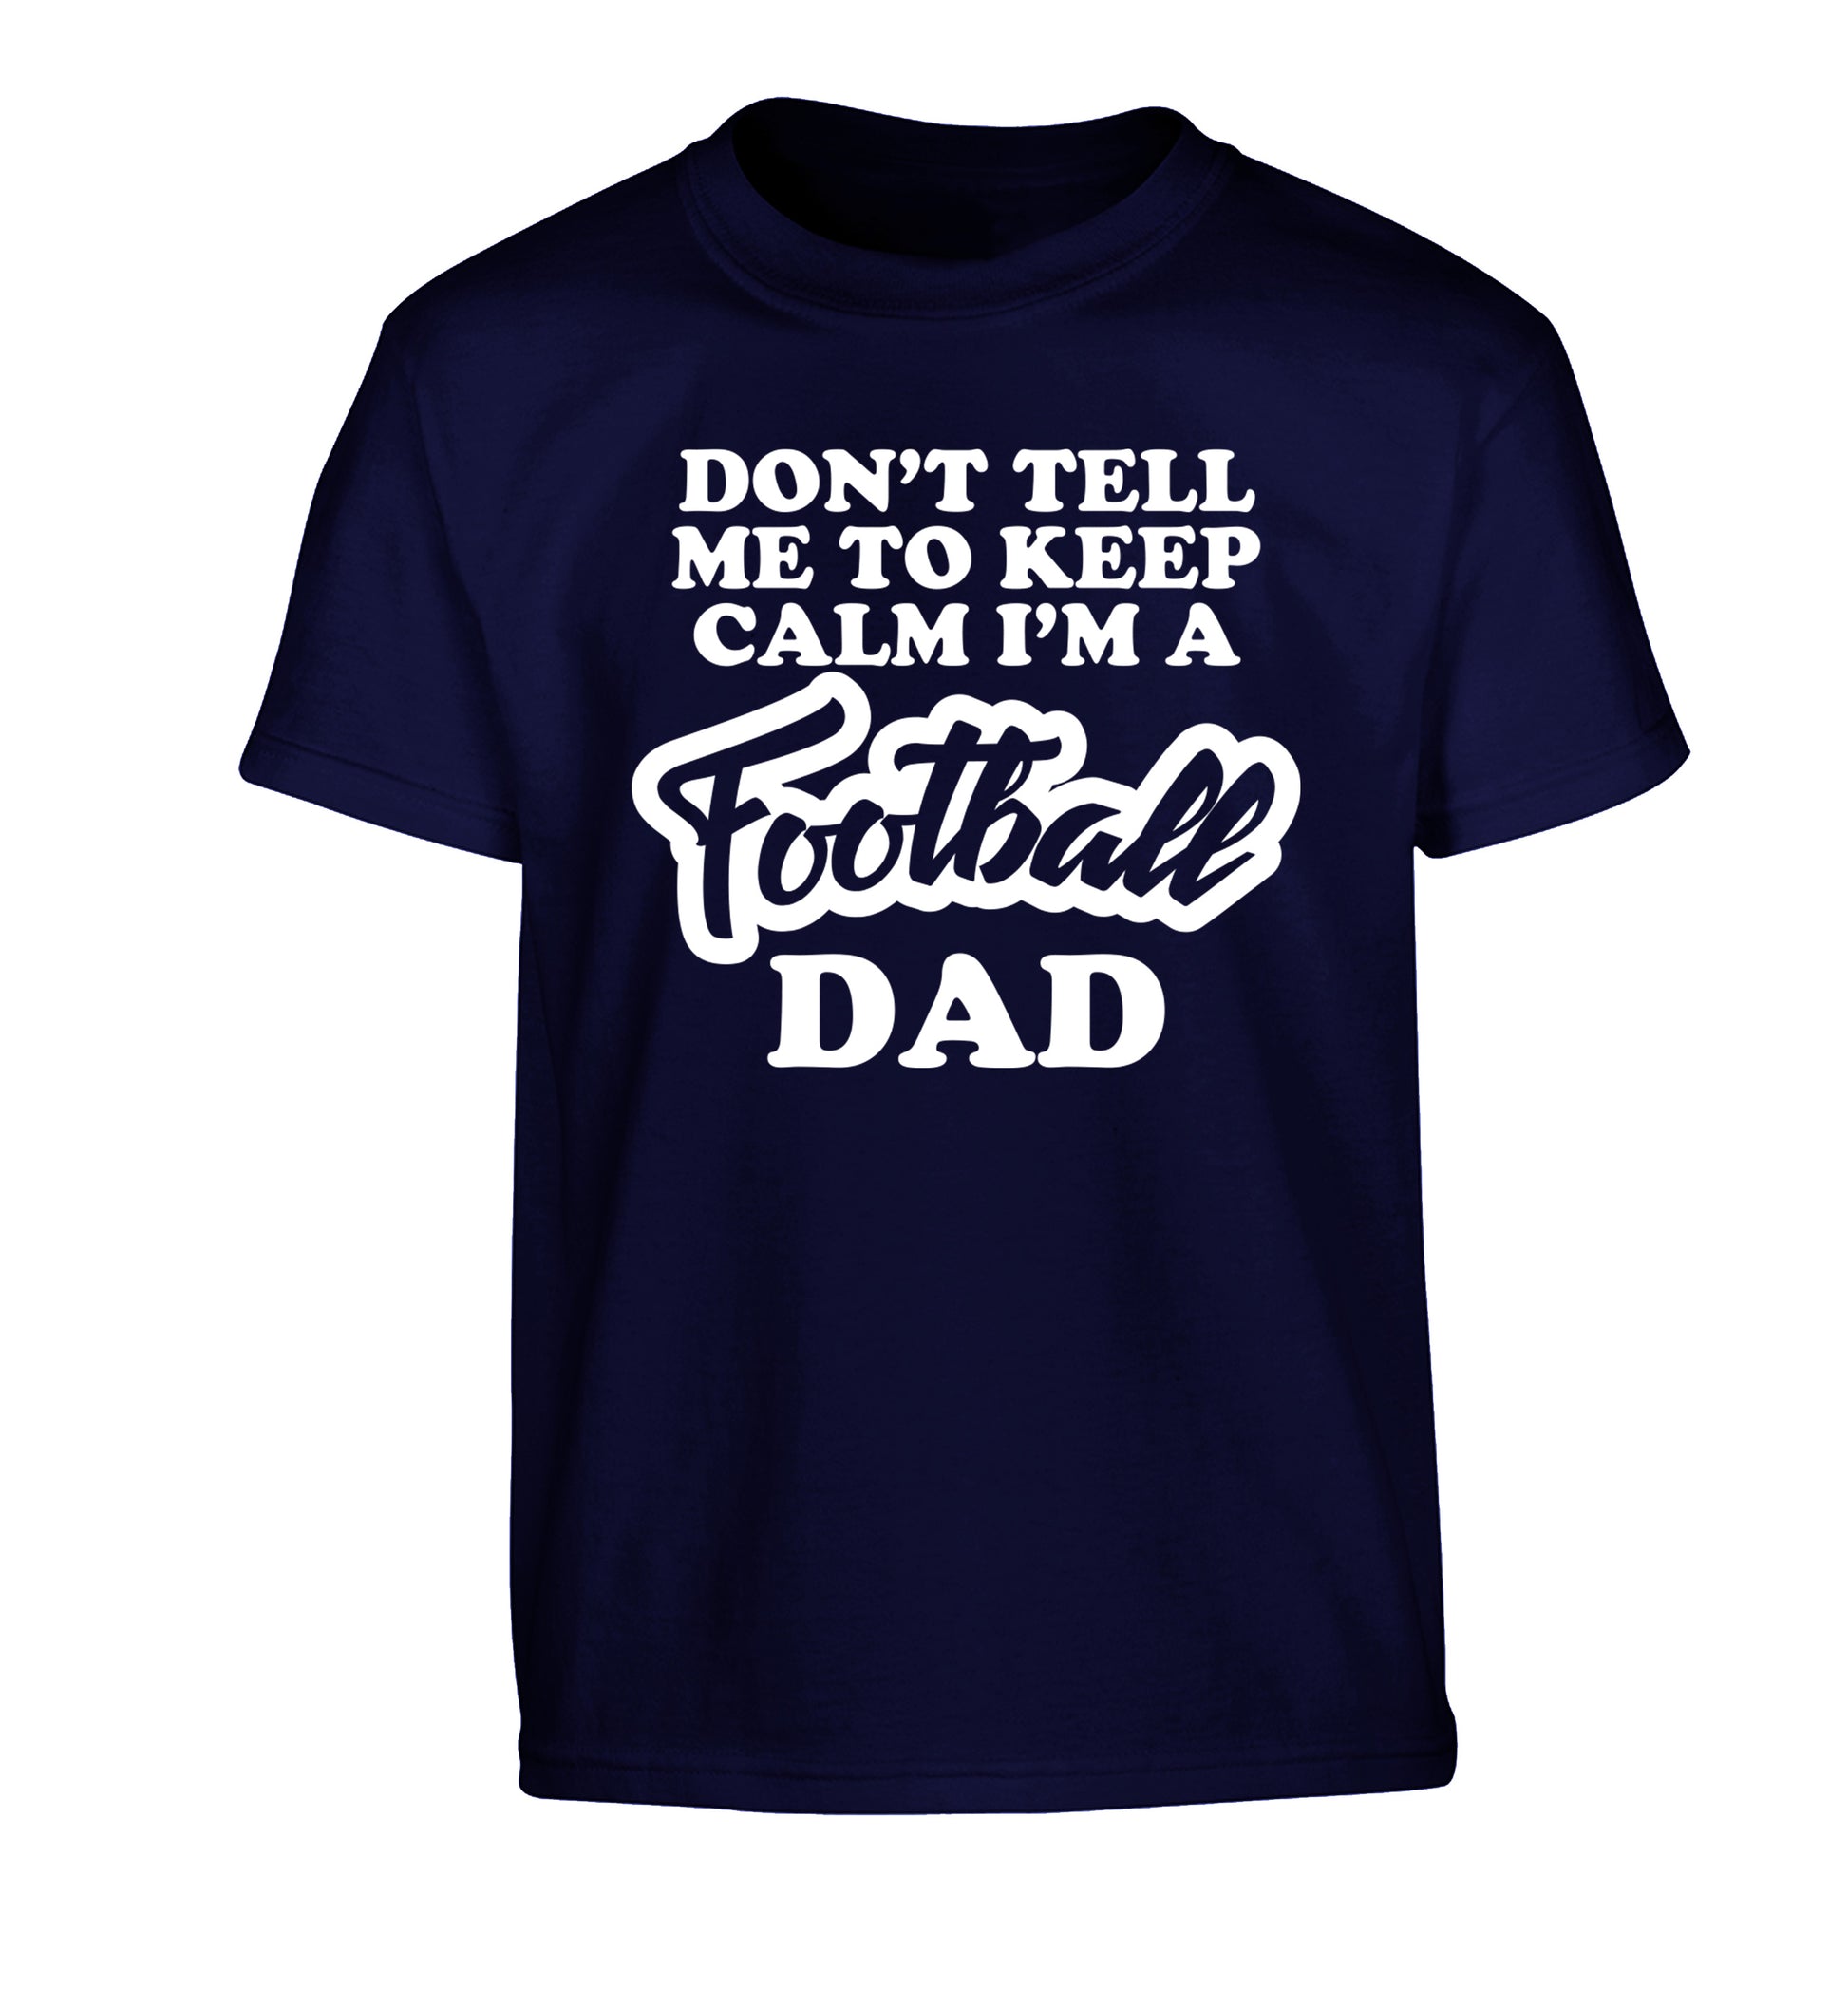 Don't tell me to keep calm I'm a football grandad Children's navy Tshirt 12-14 Years